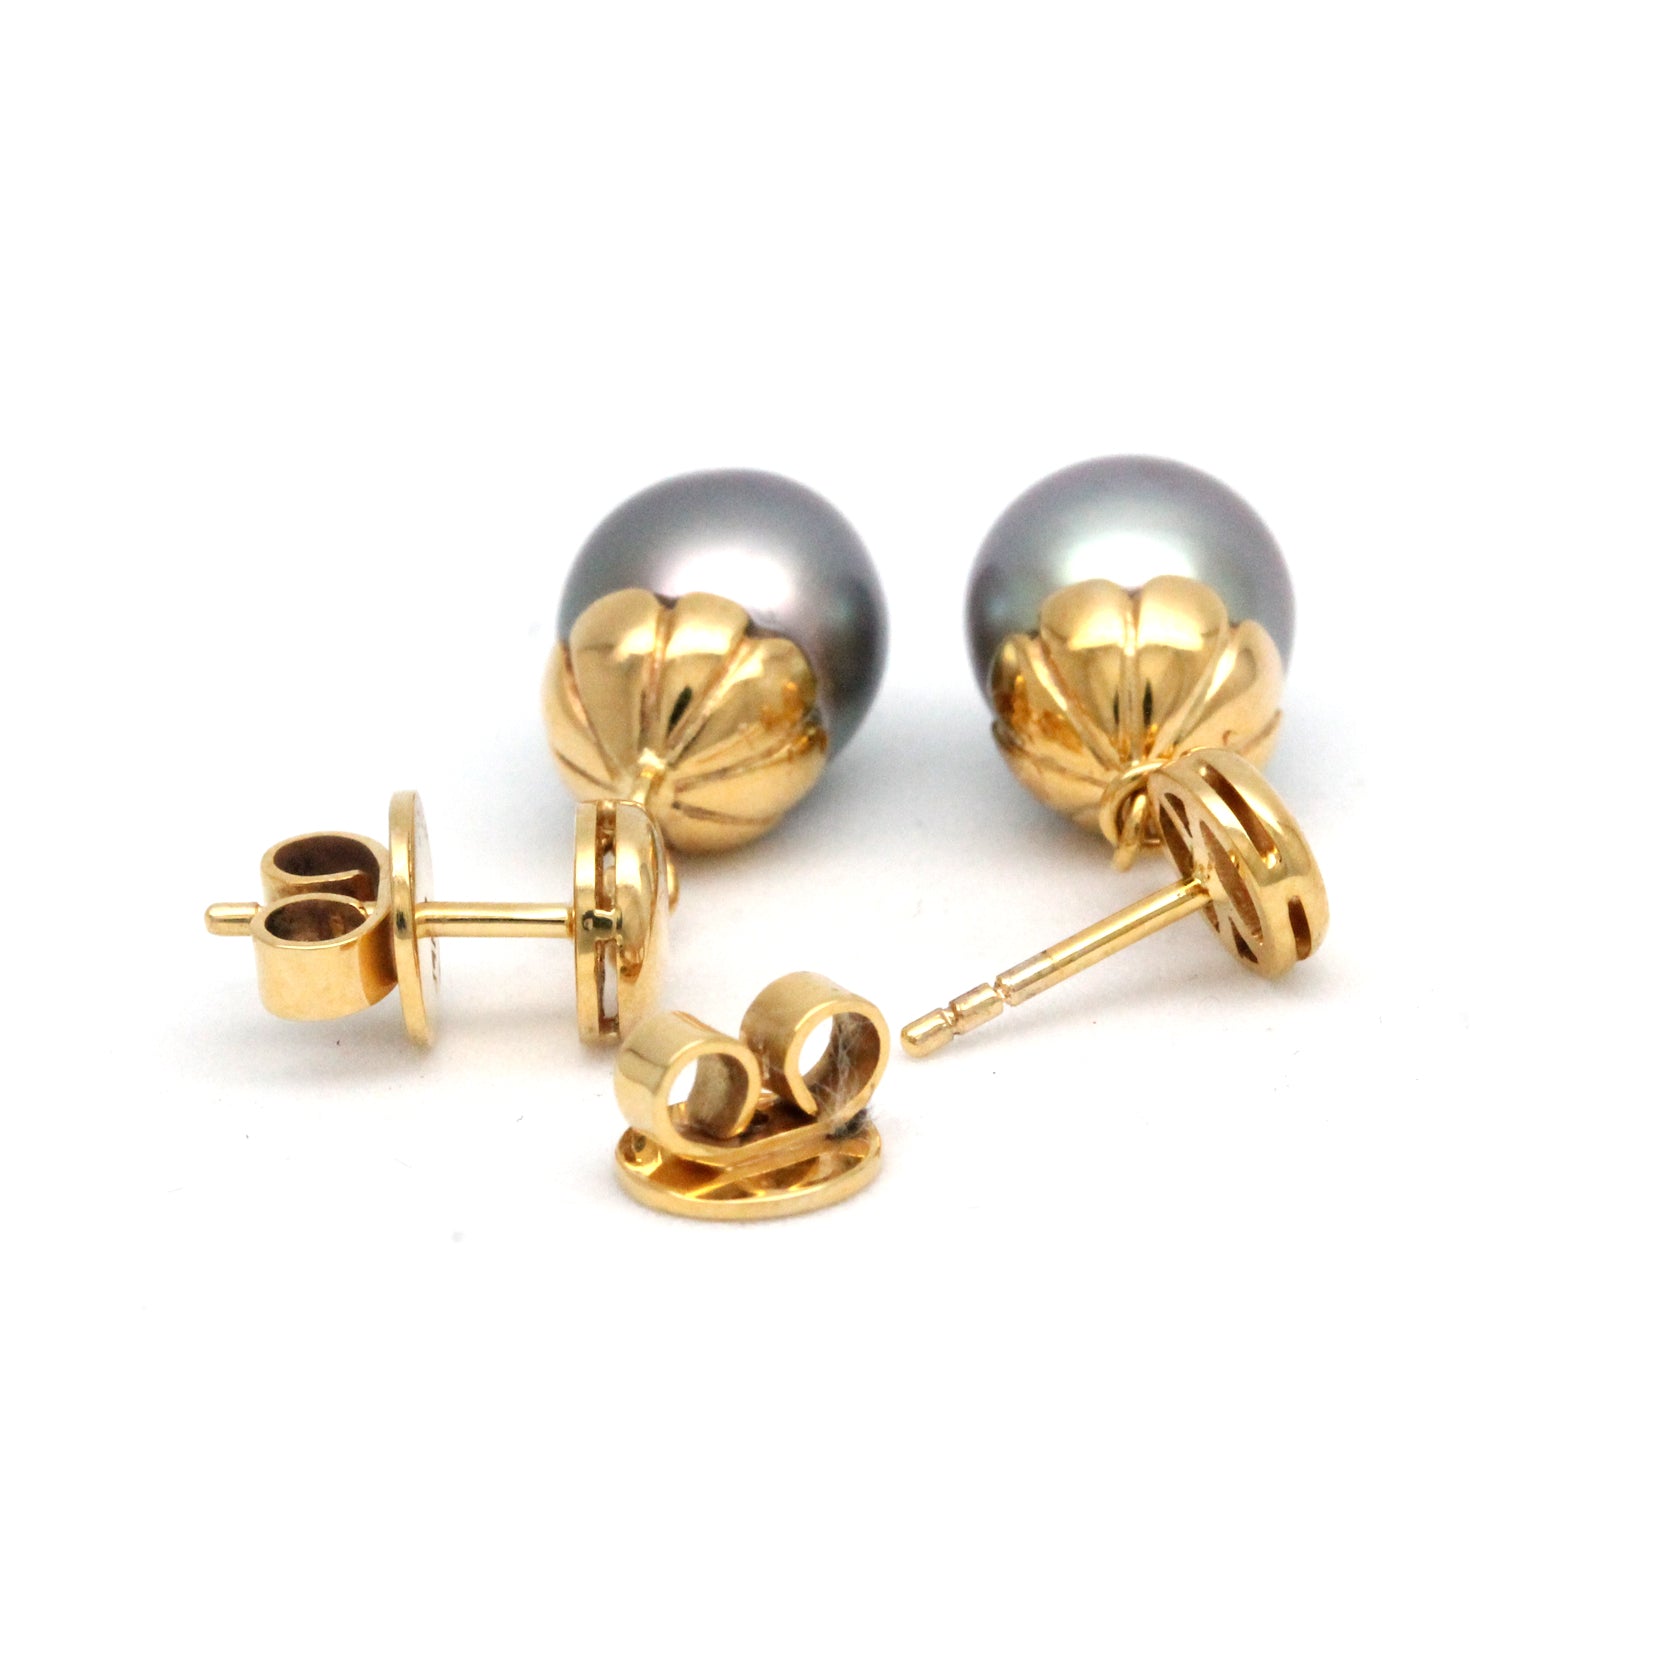 Extraordinary Cortez pearls in short-hanging Earrings14k